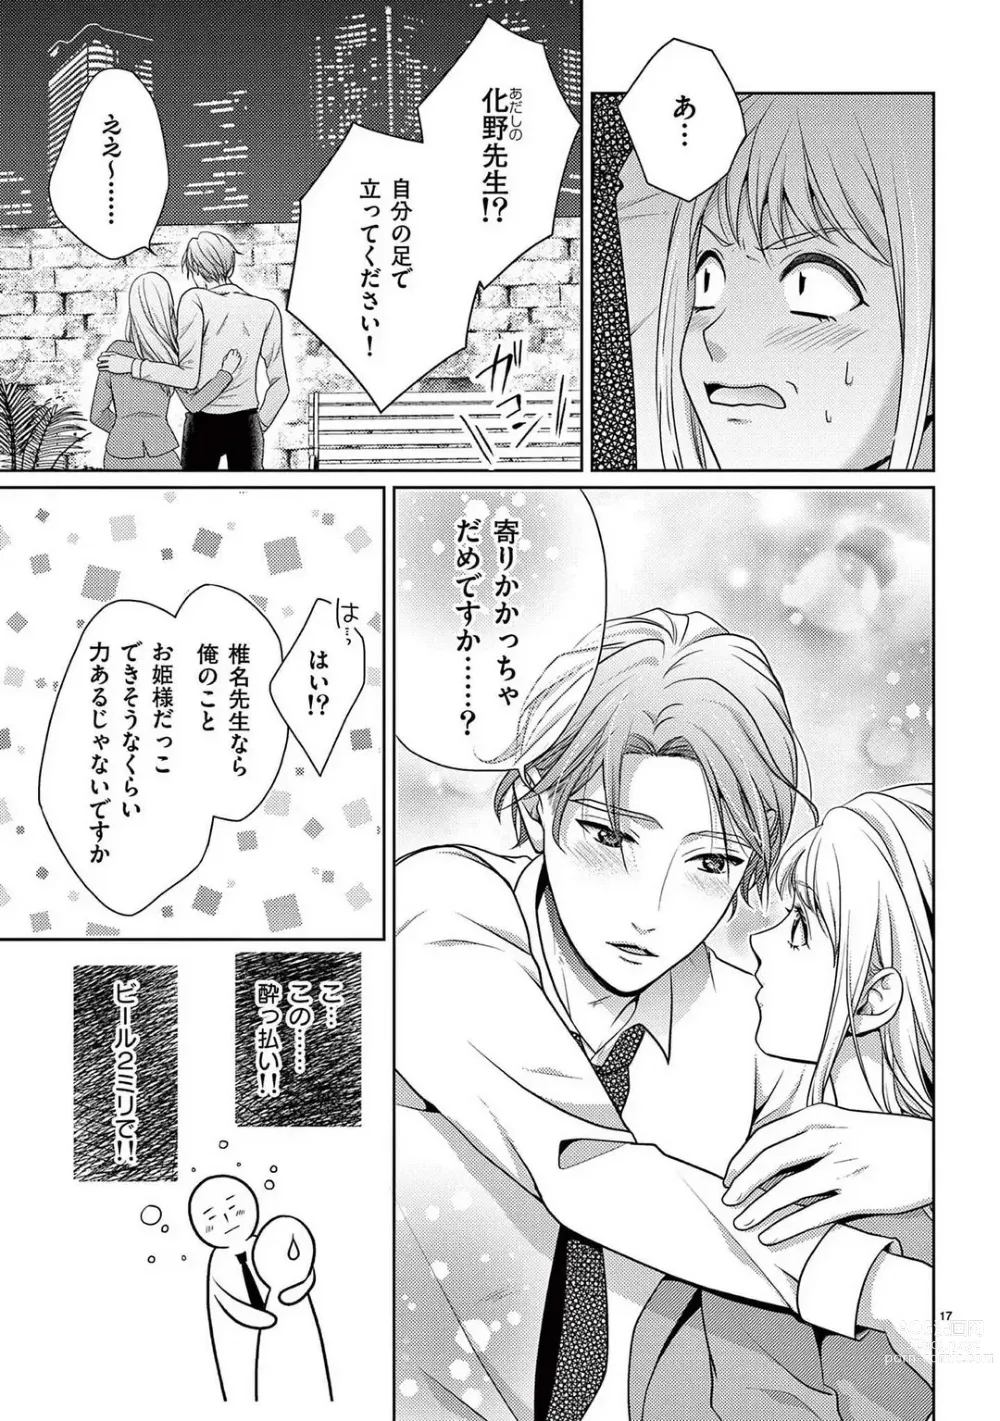 Page 18 of manga Sono Ase, Sekkusu Pafuyūmu. 〜 Sutte, Kisushite, Musabotte~Chp.1-7